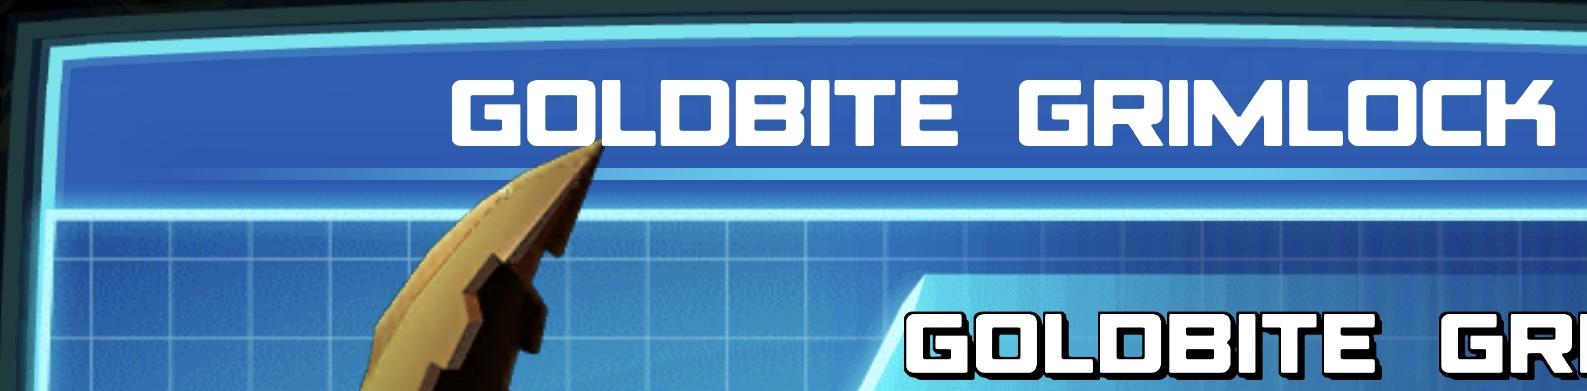 The event banner for Goldbite Grimlock